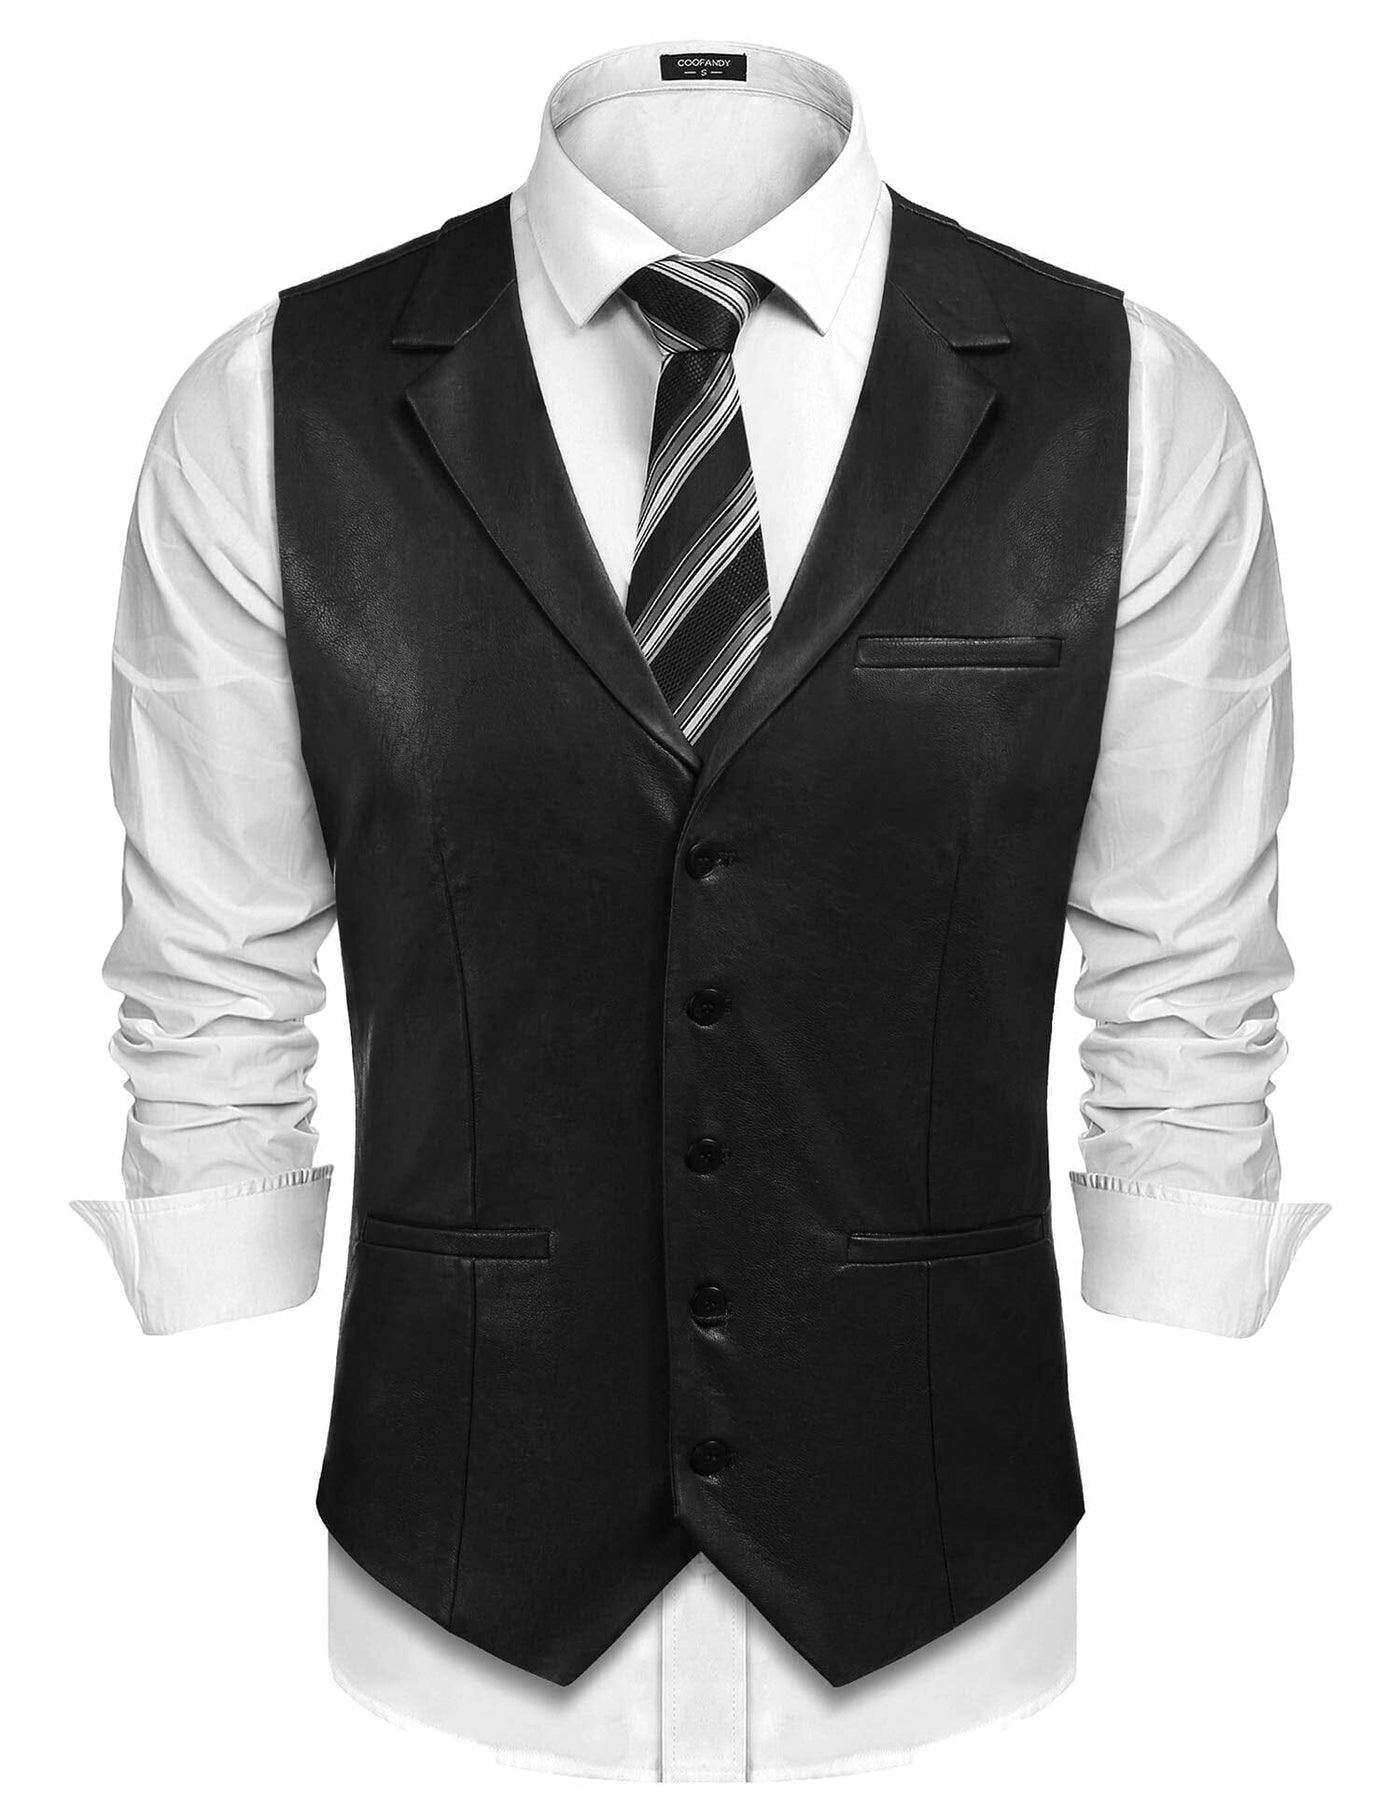 Coofandy Leather Vest (US Only) Vest coofandy Black S 